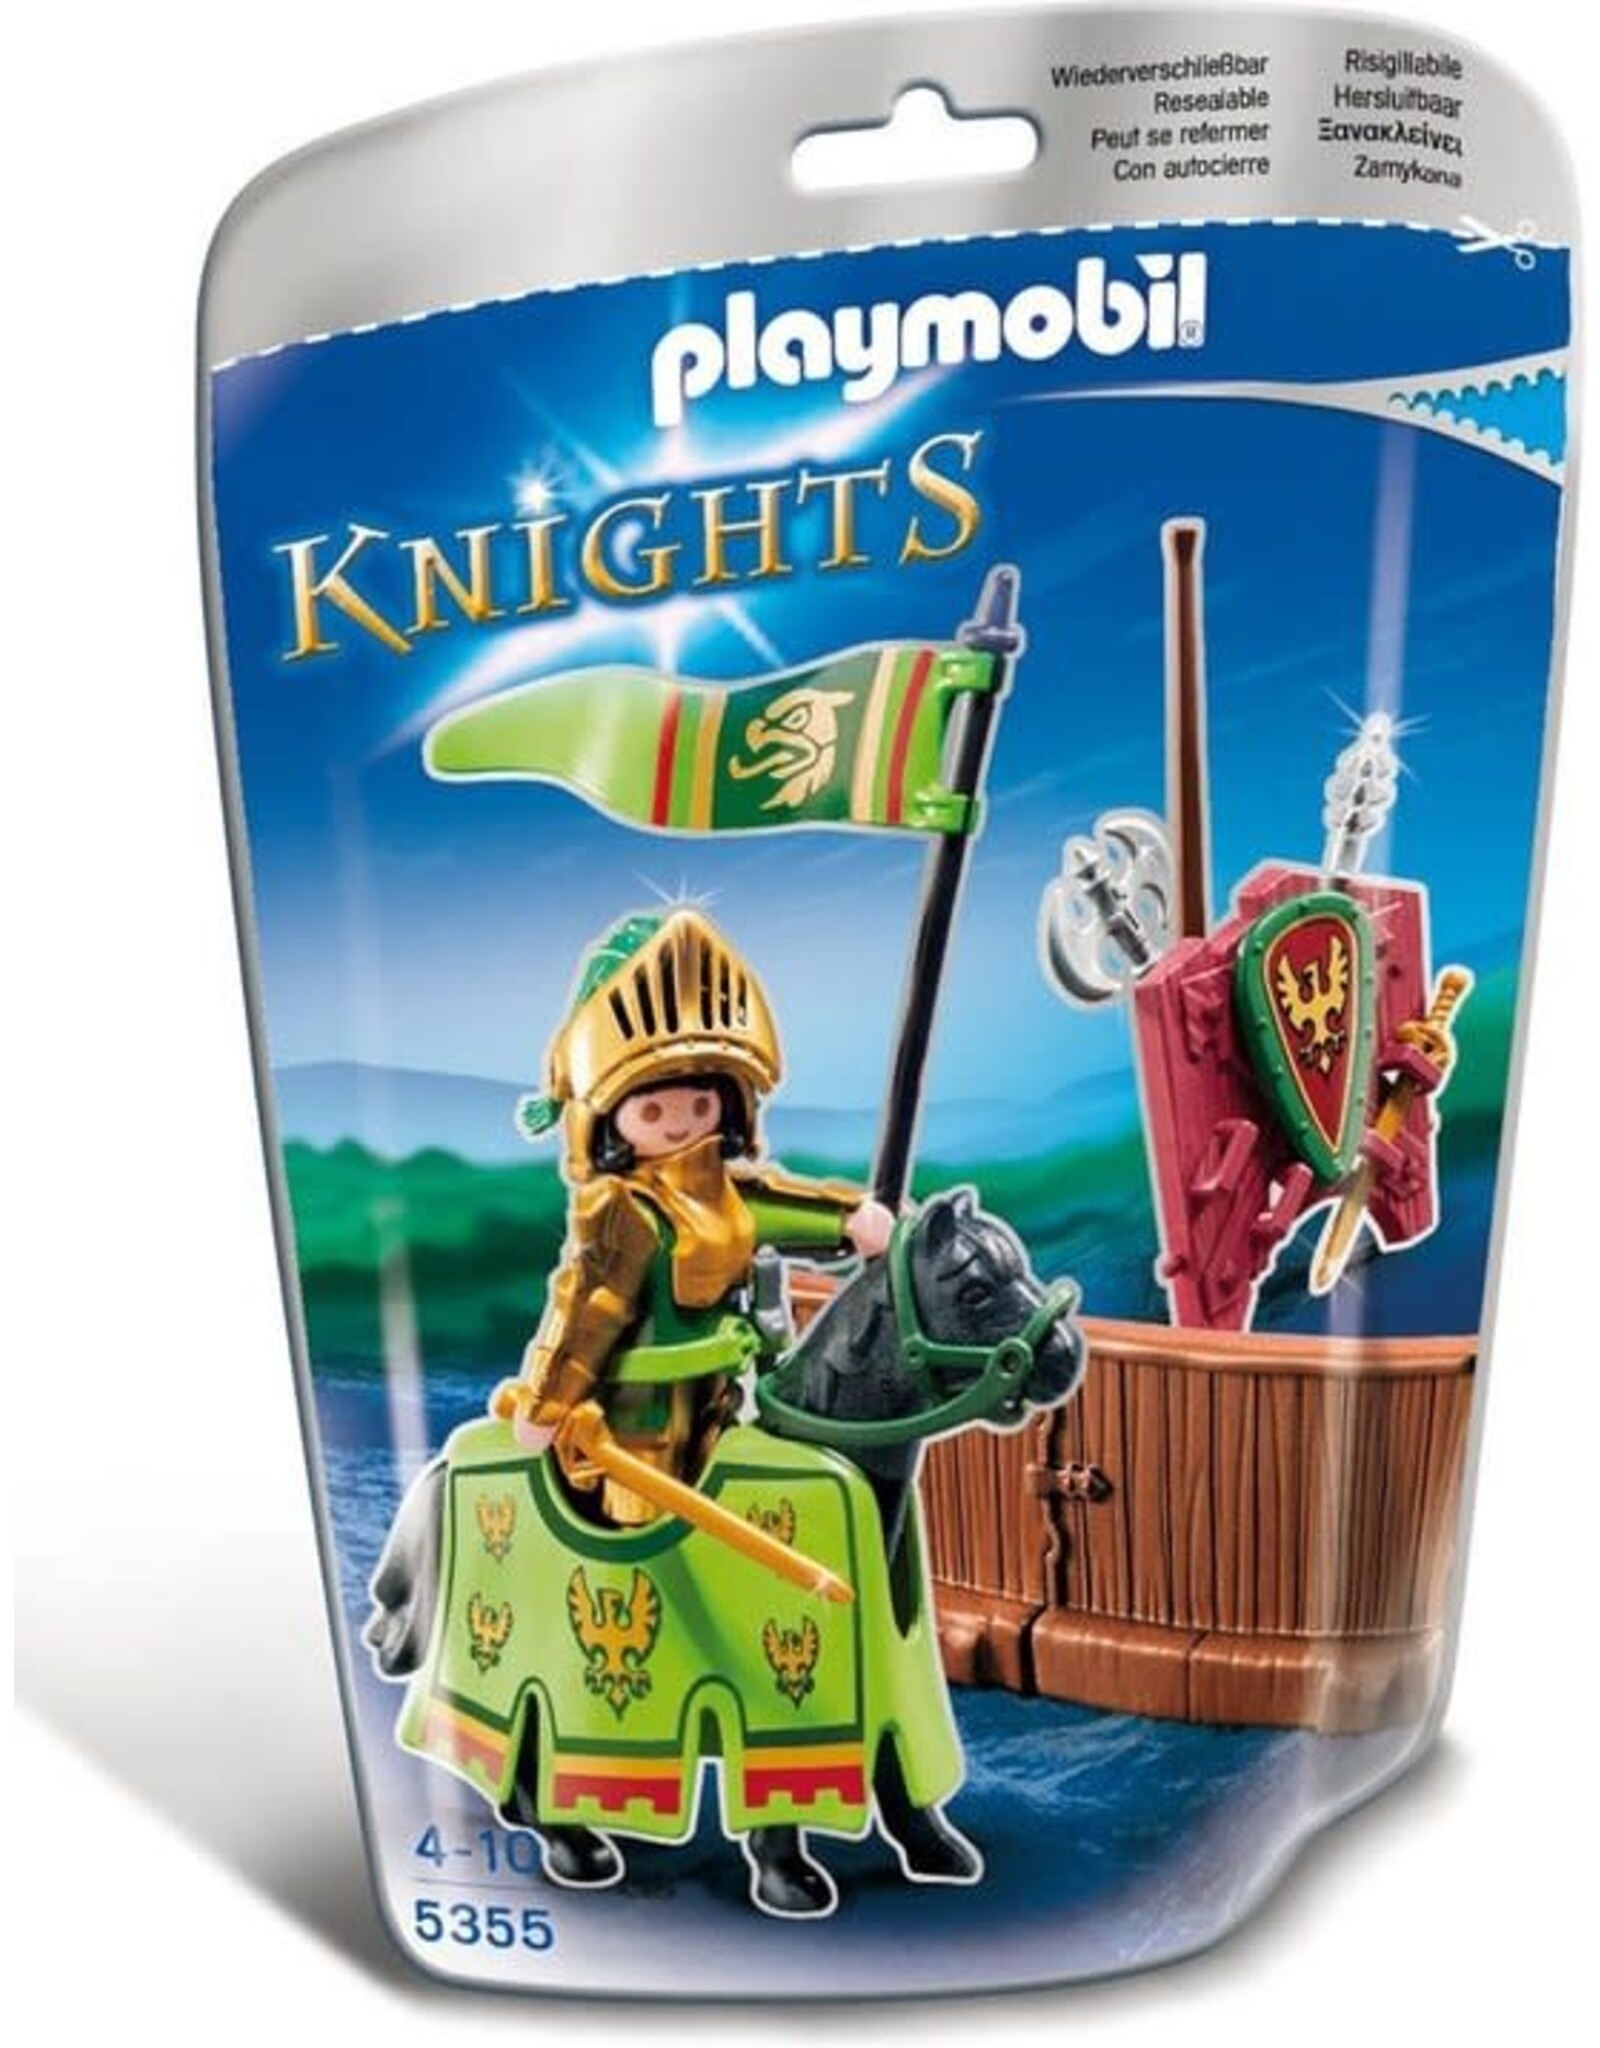 Playmobil Playmobil Knights 5355 Toernooiridder van de Orde van de Adelaar